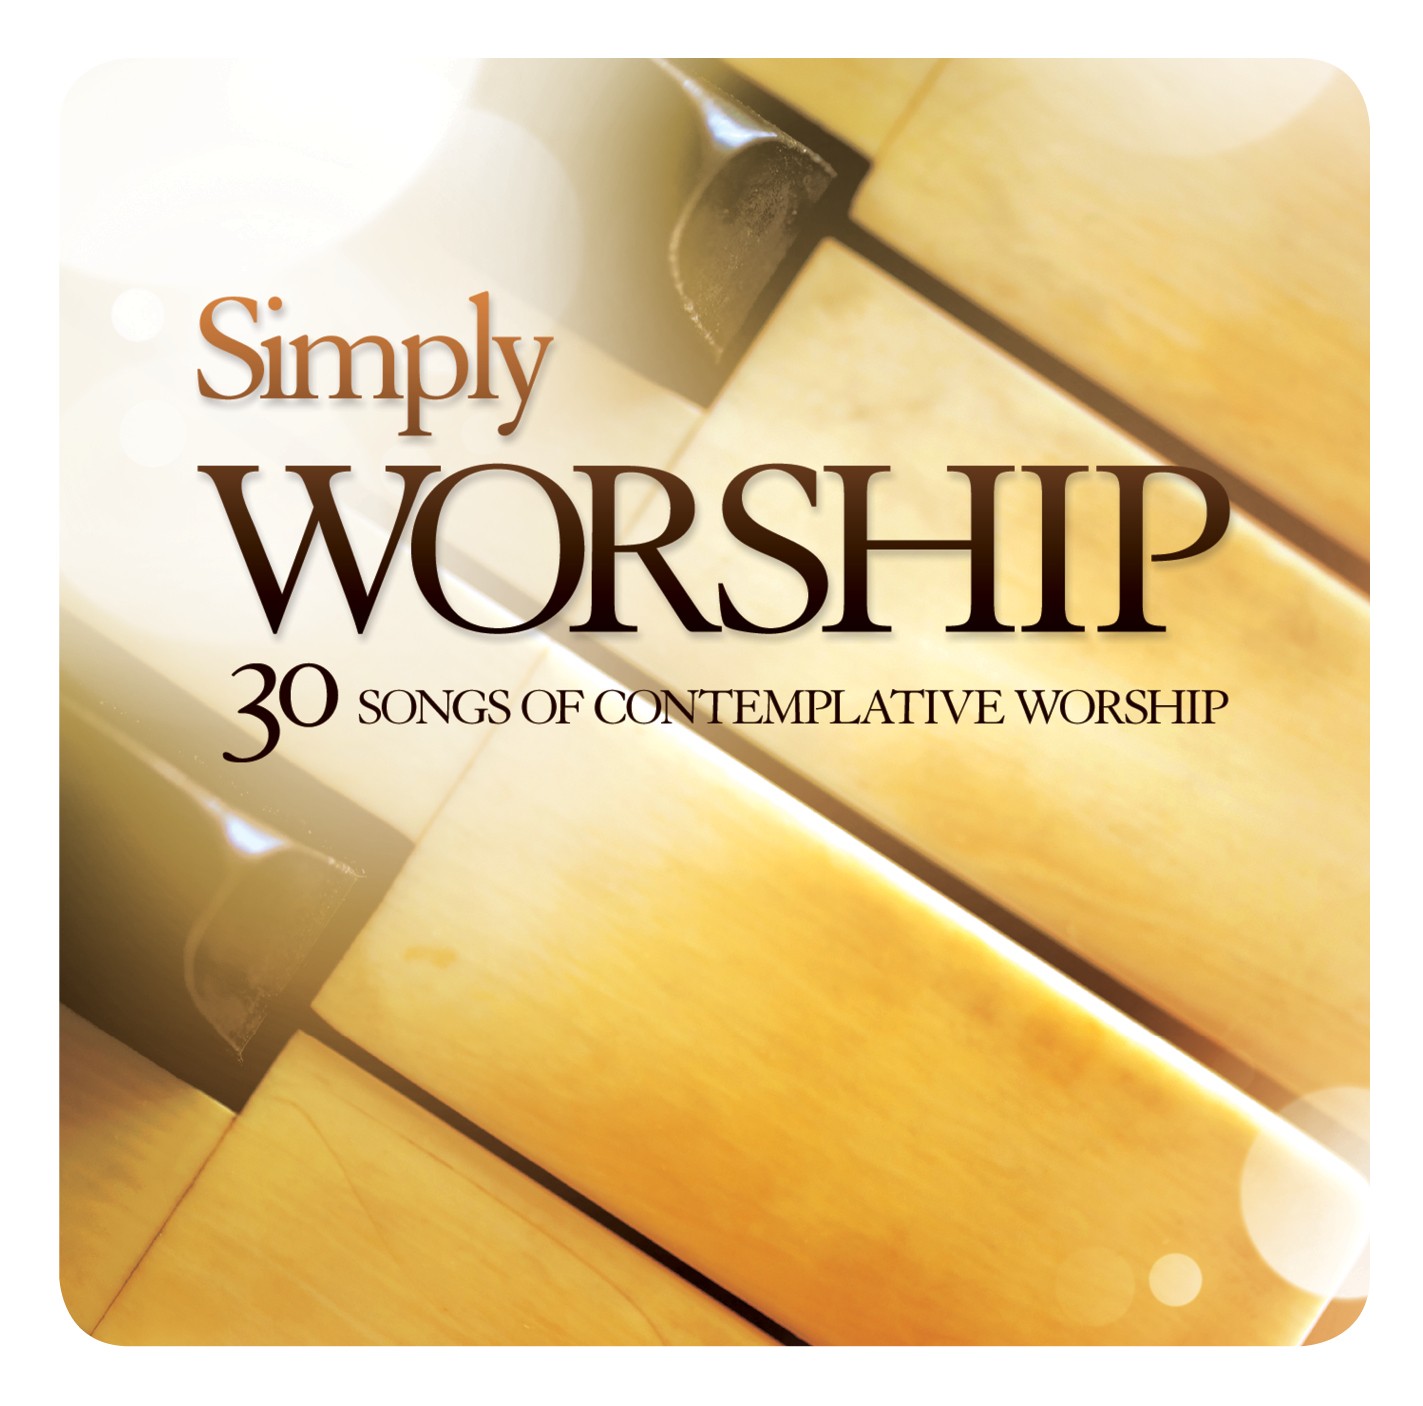 SIMPLY WORSHIP CD